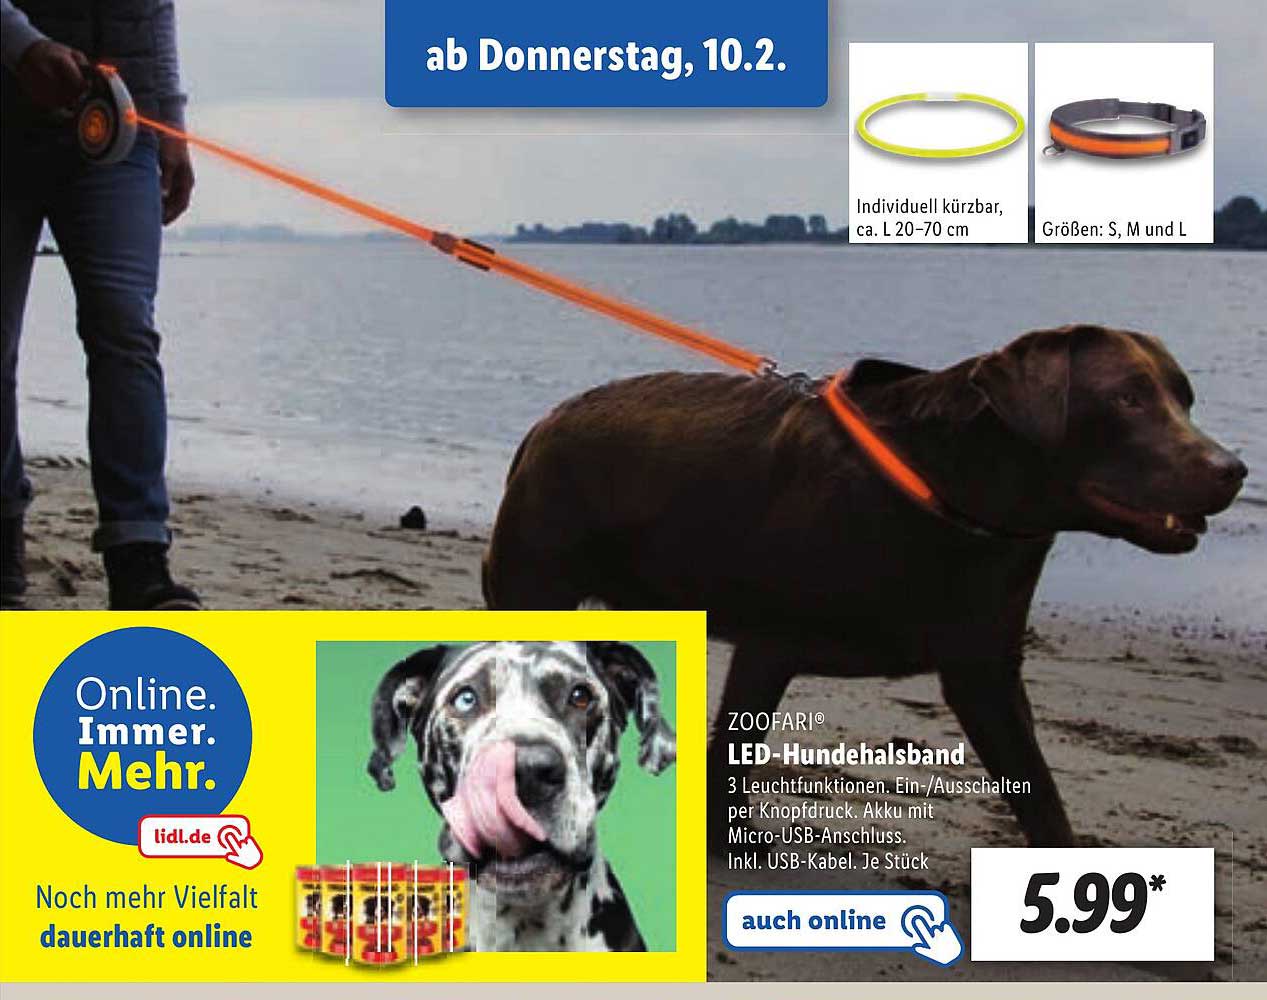 Zoofari Led-Hundehalsband Angebot Lidl bei